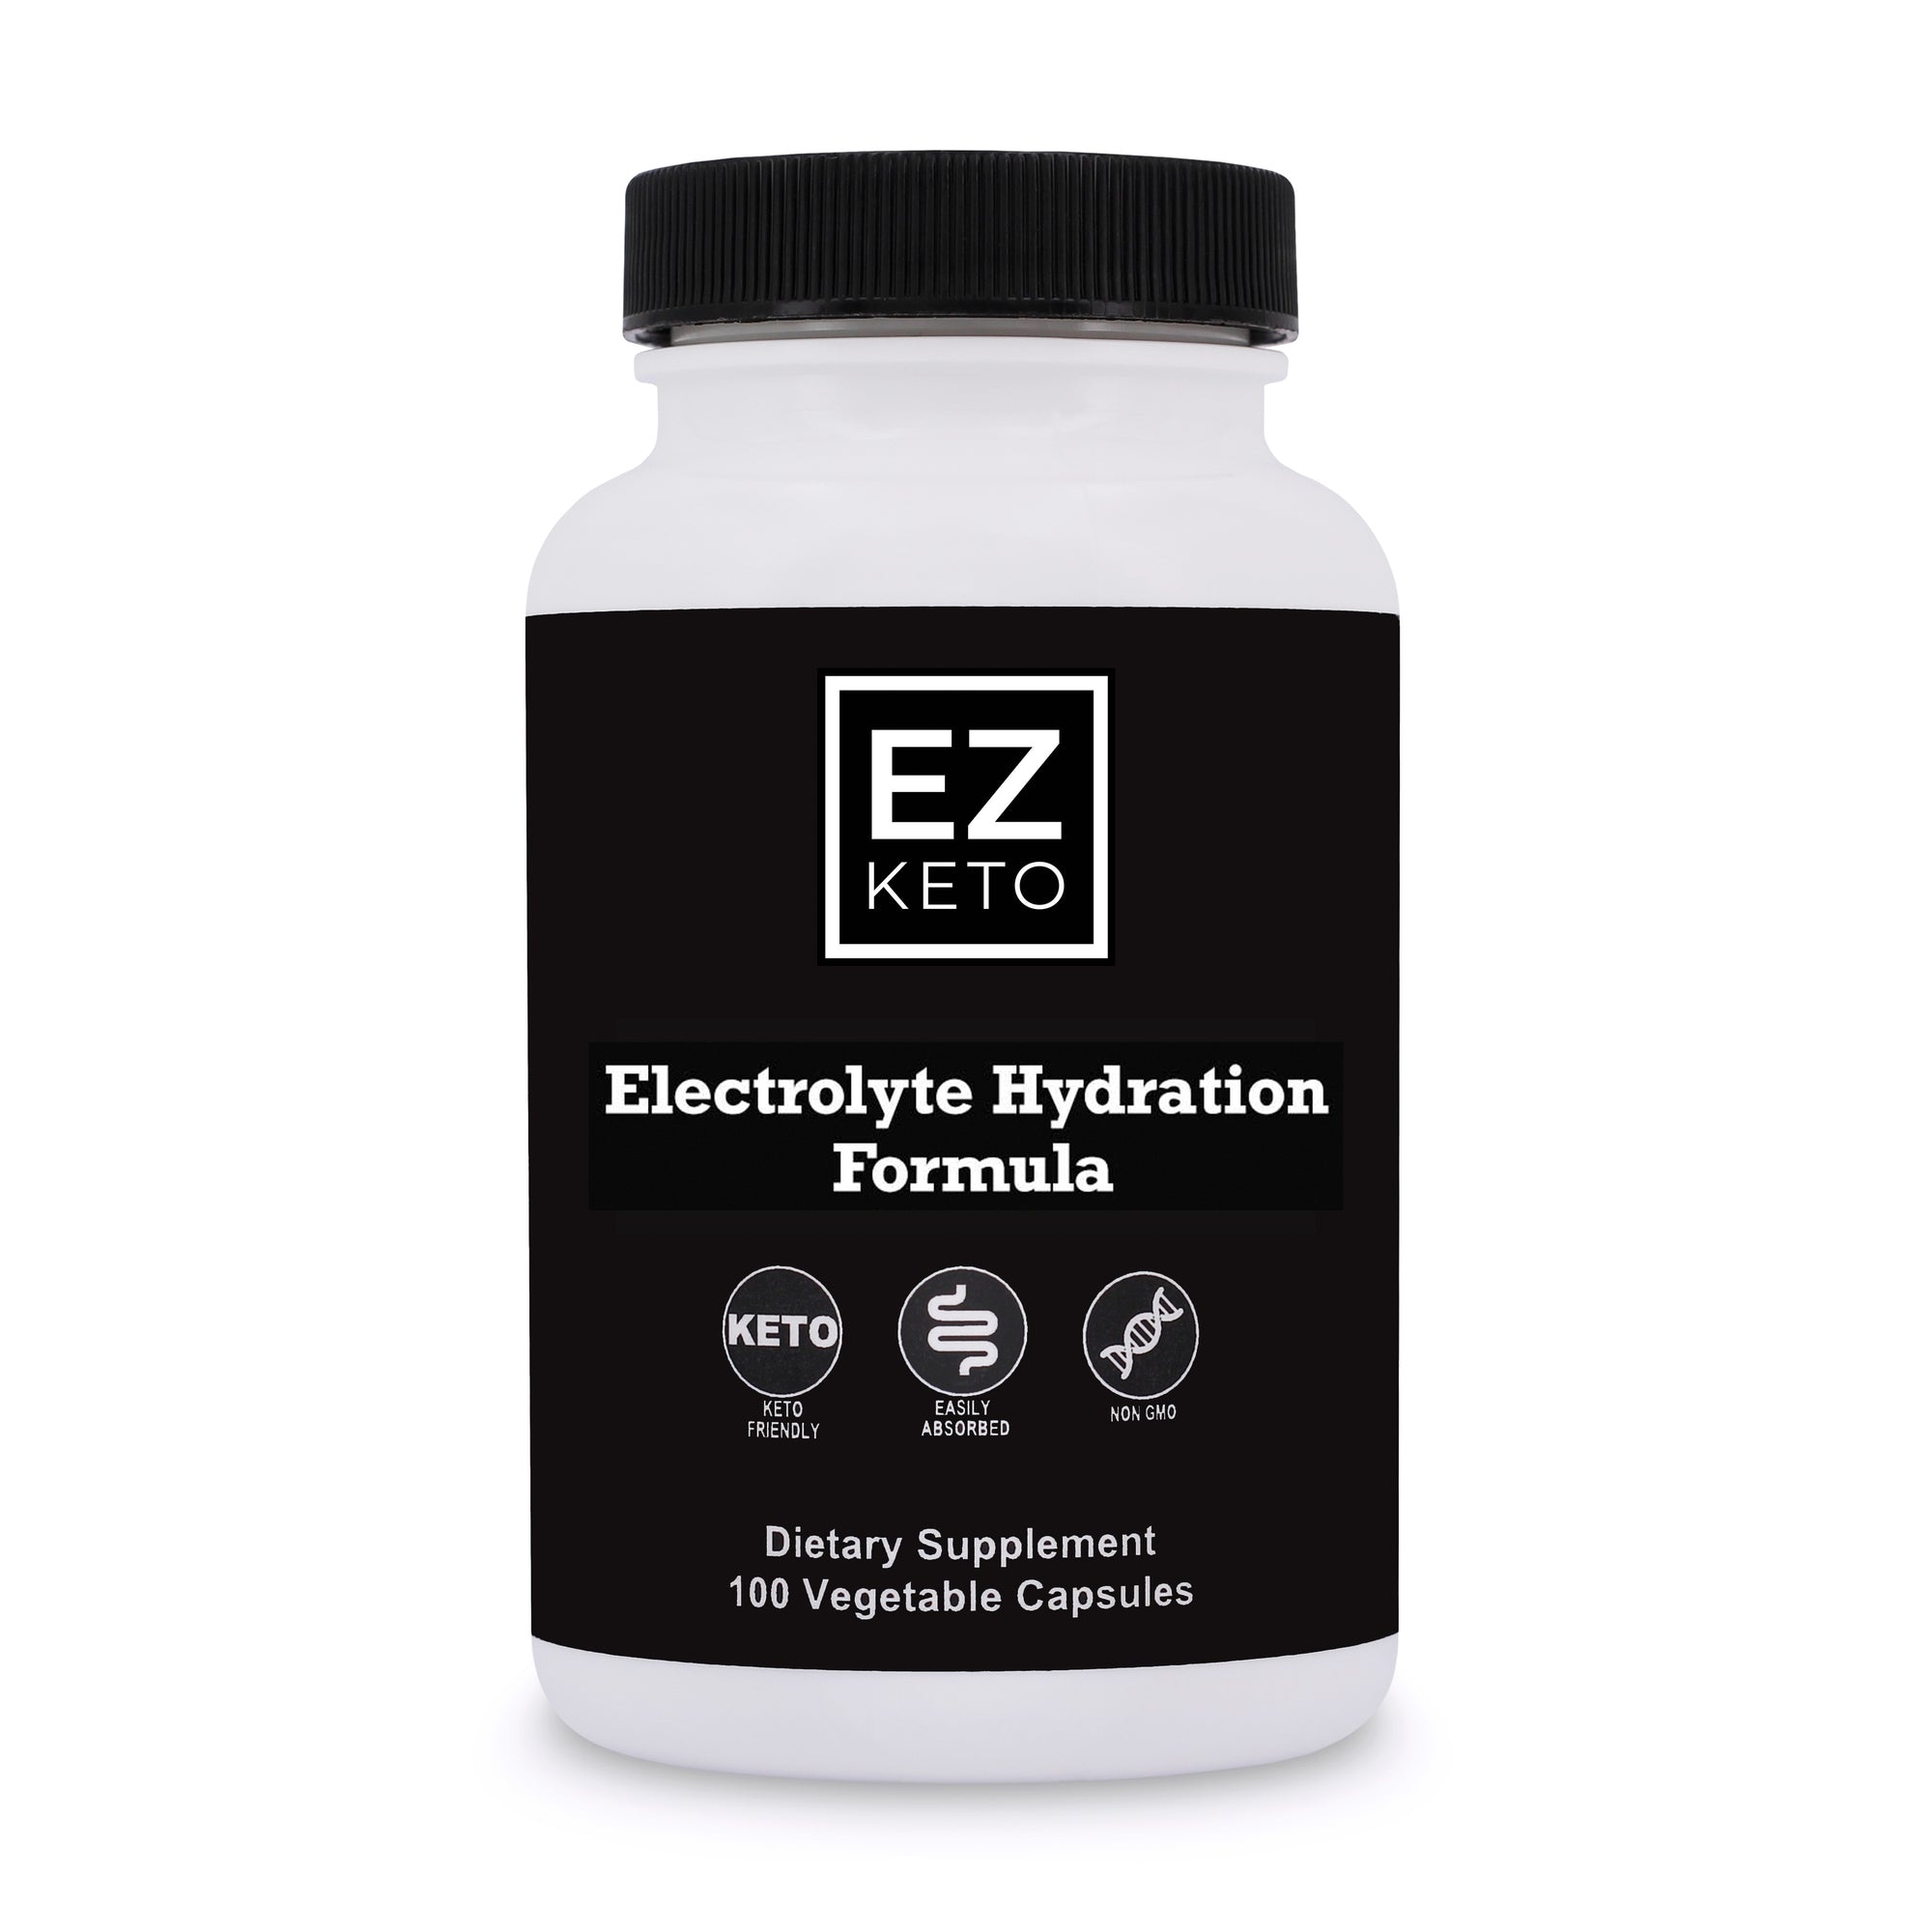 Electrolyte Hydration Formula